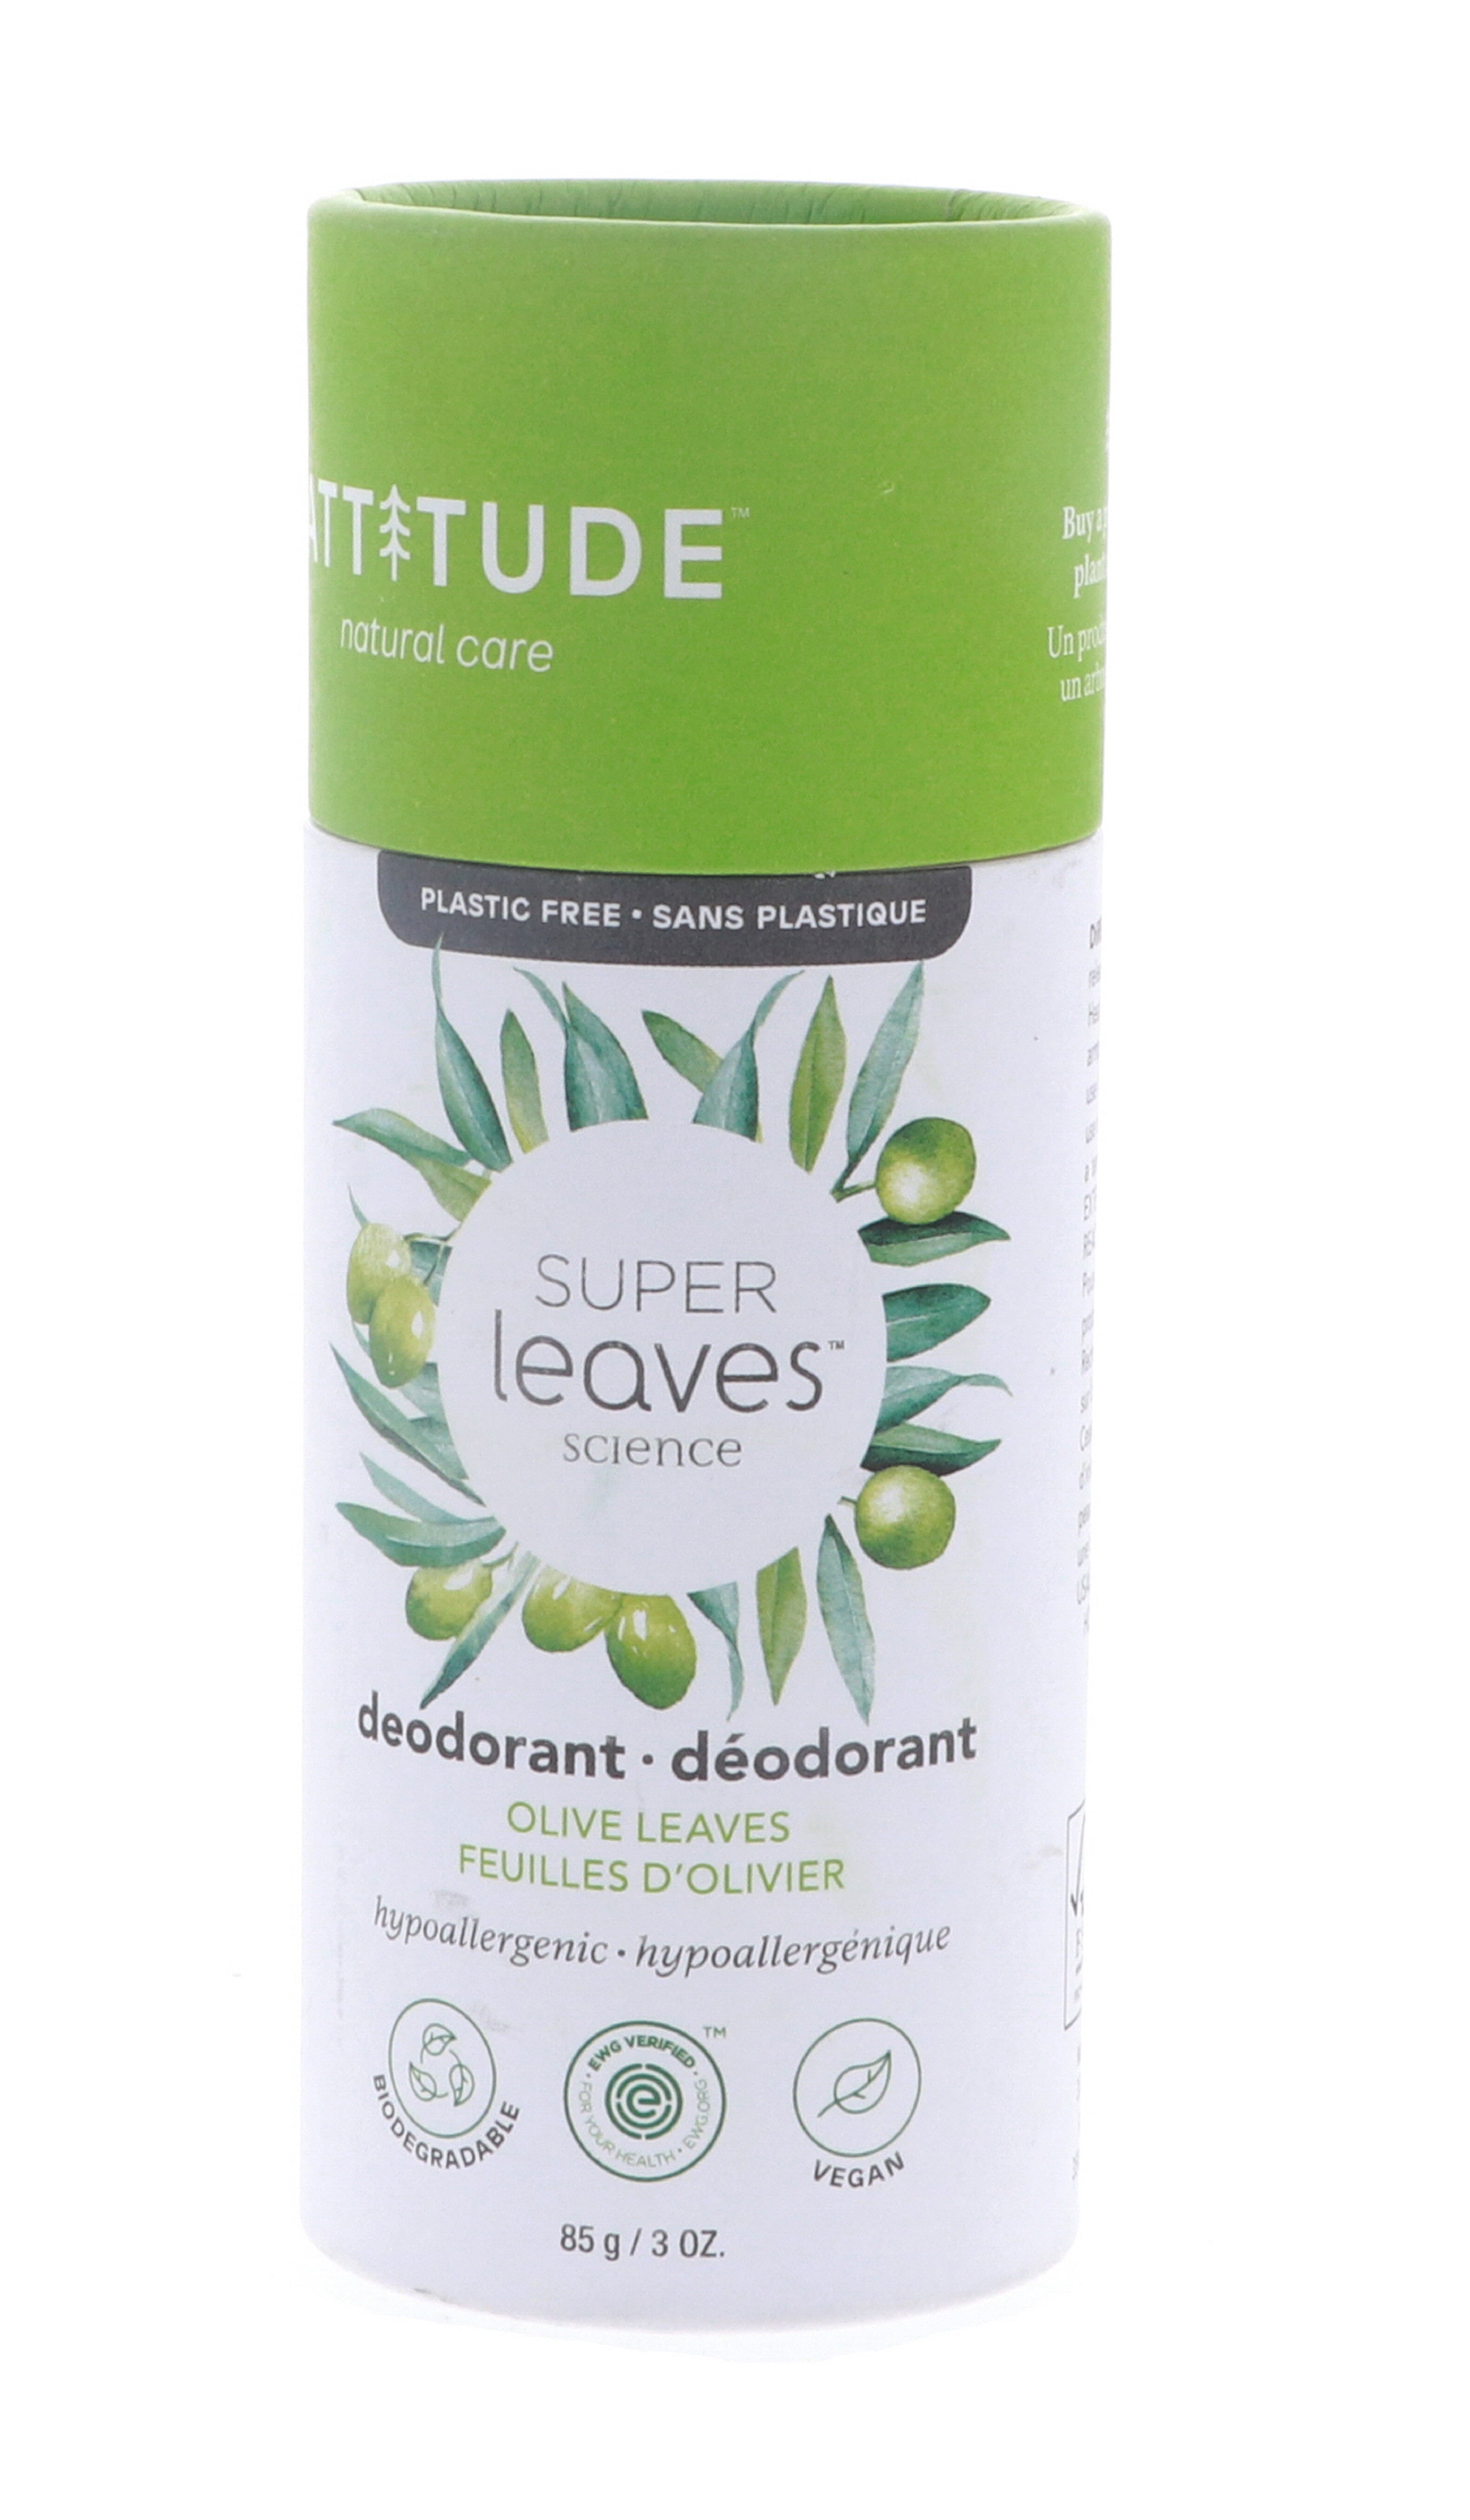 Attitude Super Leaves Olive Leaves Deodorant Stick